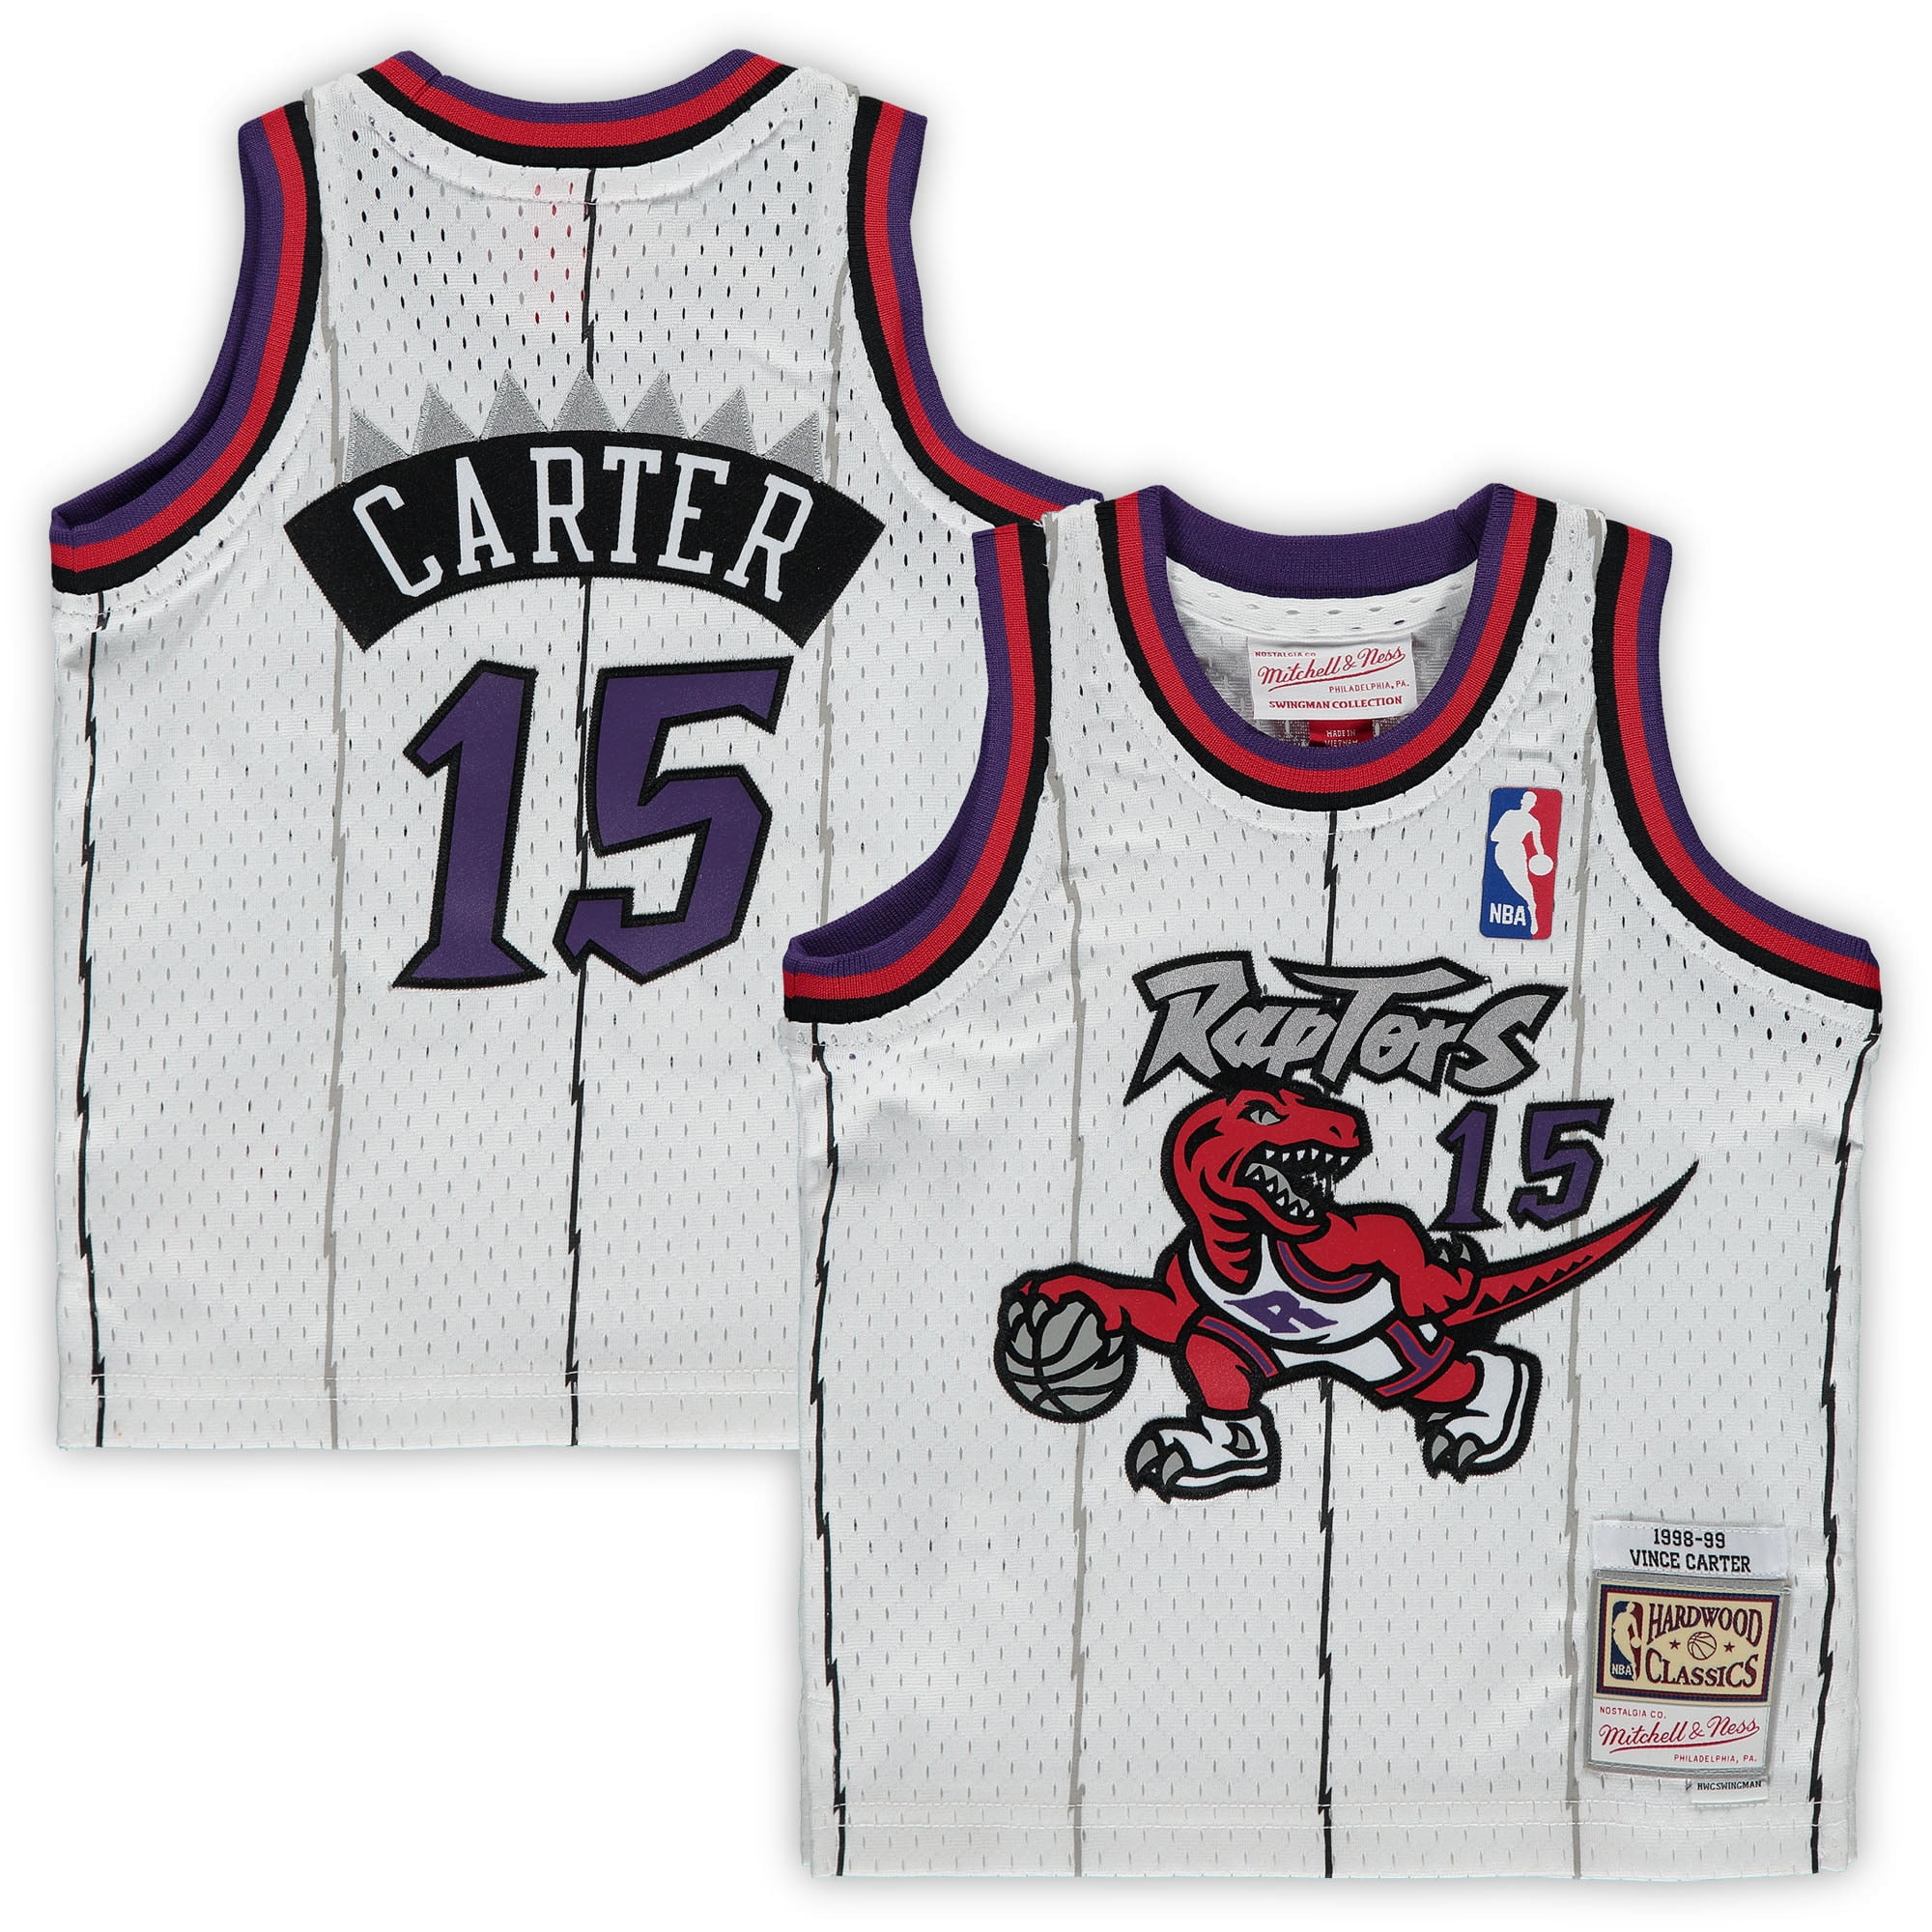 Mitchell & Ness NBA Toronto Raptors Carter mesh swingman singlet in purple